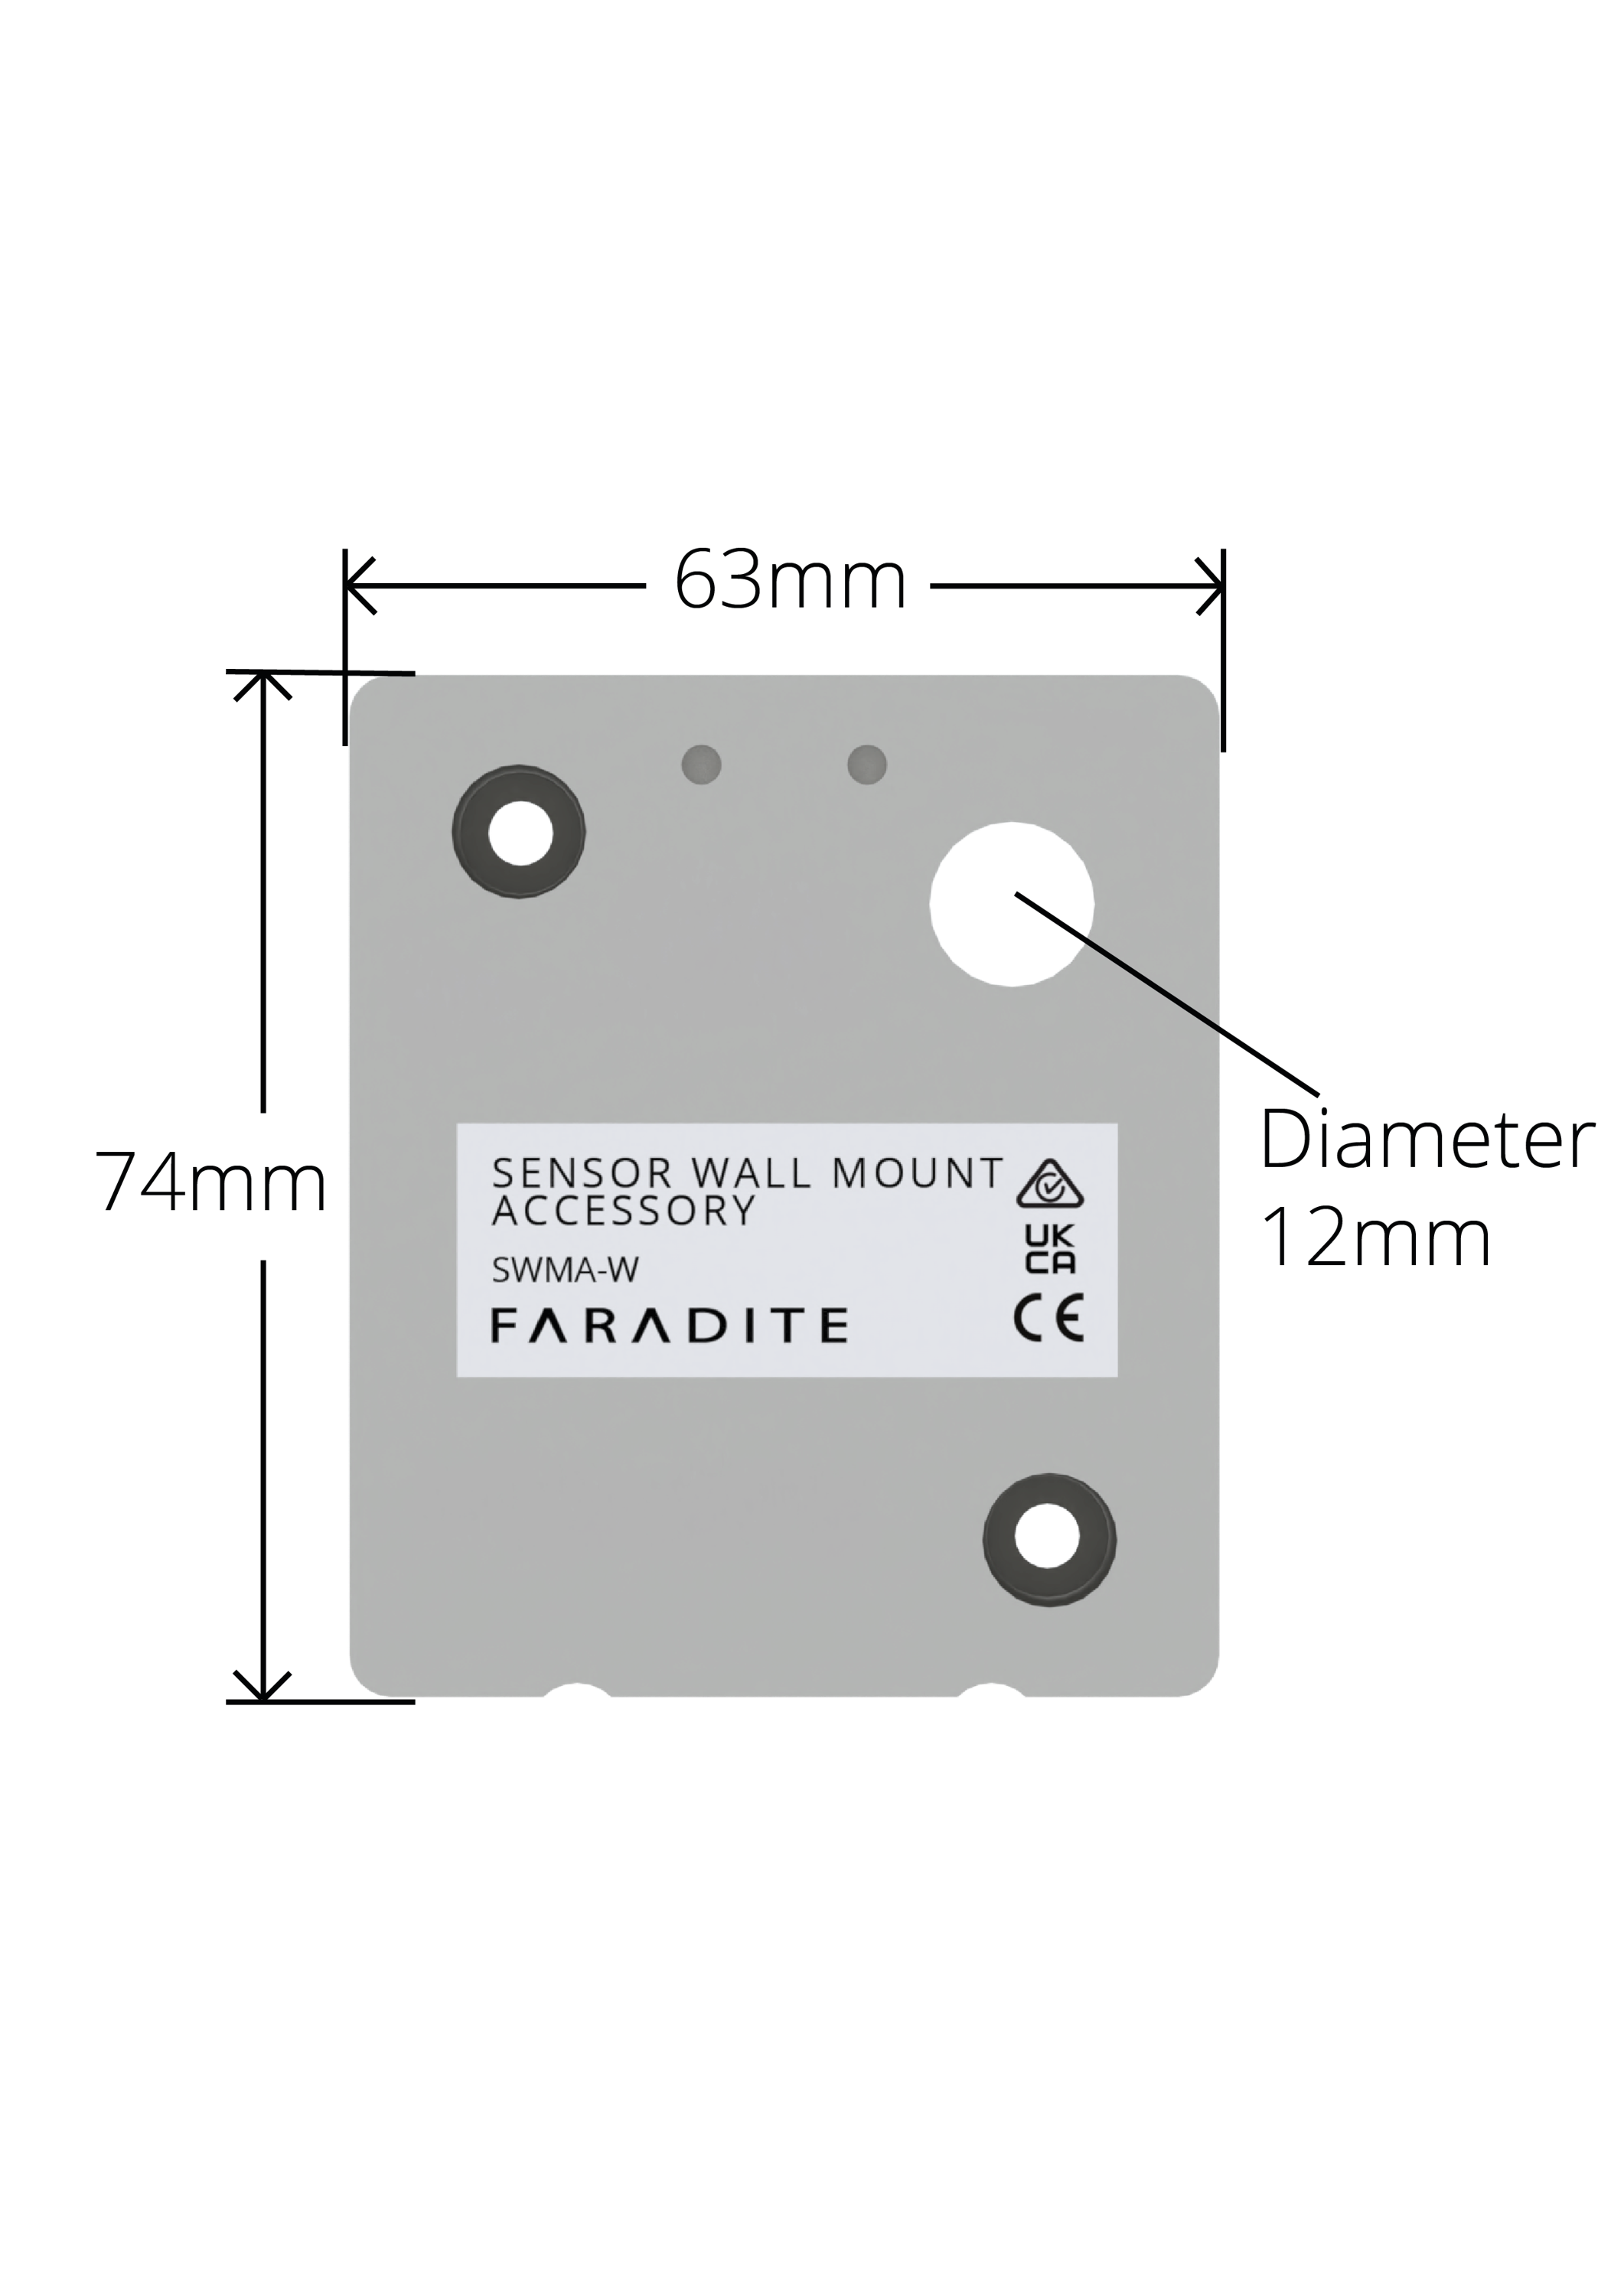 Black Faradite Motion Sensor 360 volt free dry contact 35mm dimensions